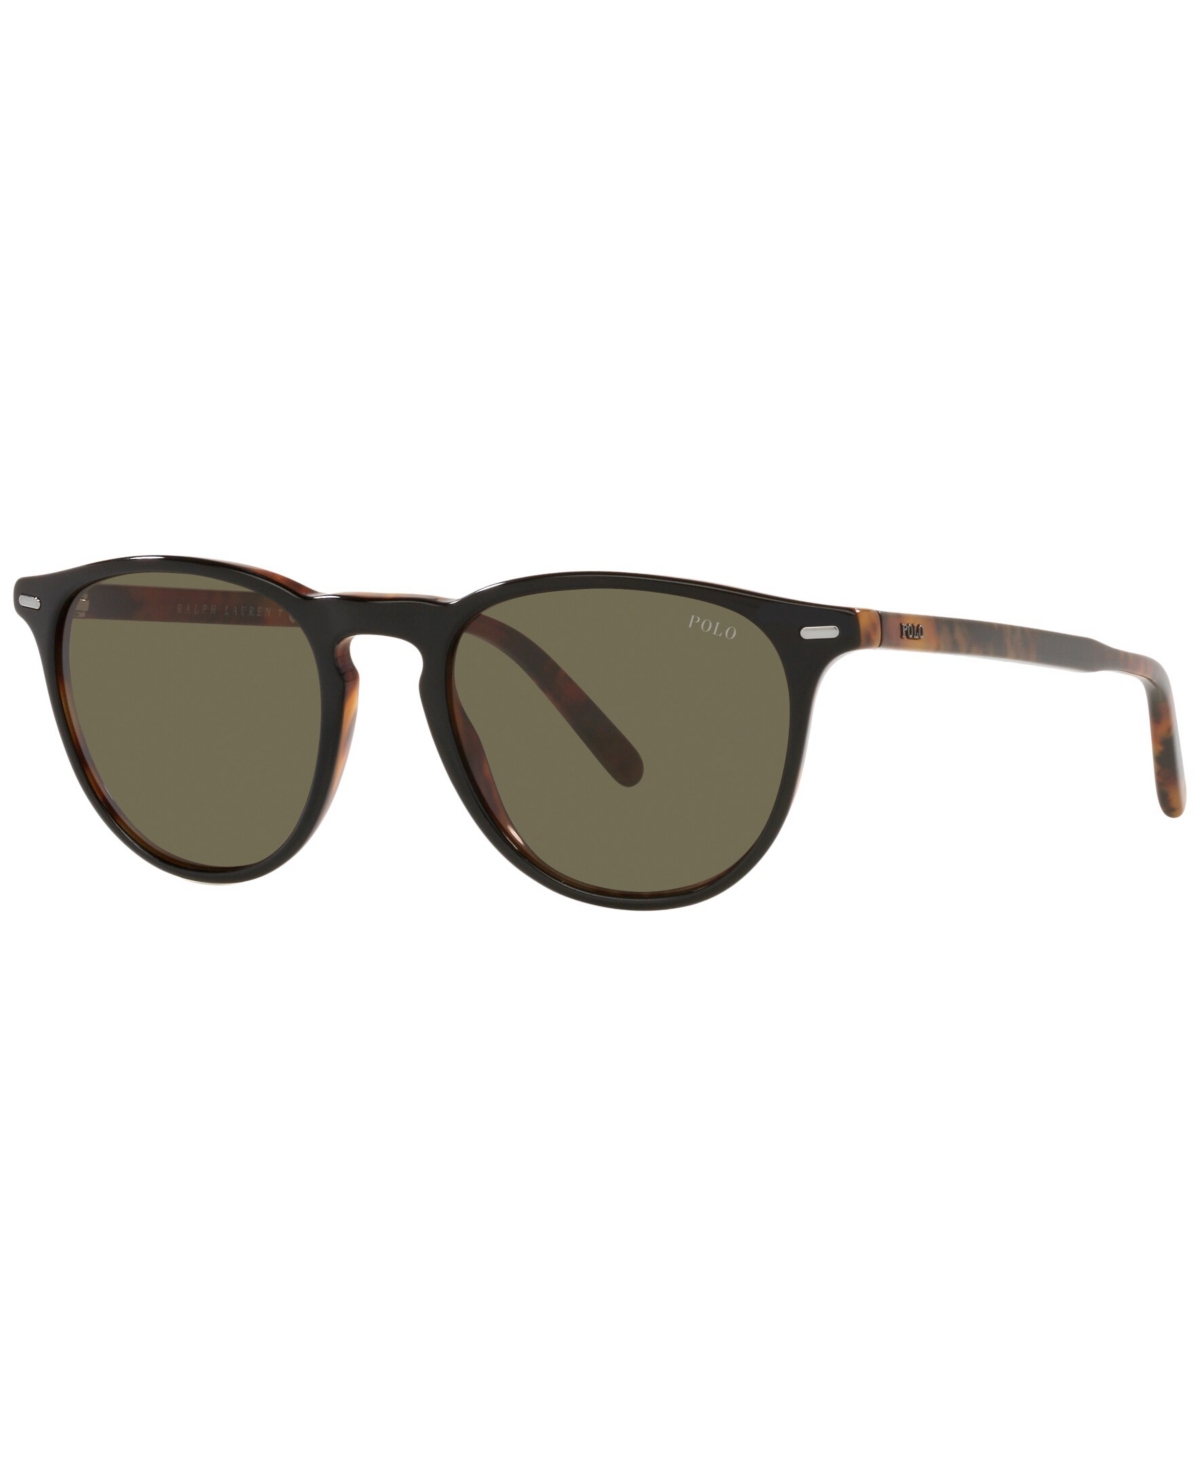 Polo Ralph Lauren Men's Sunglasses, Ph4181 51 In Shiny Black Havana